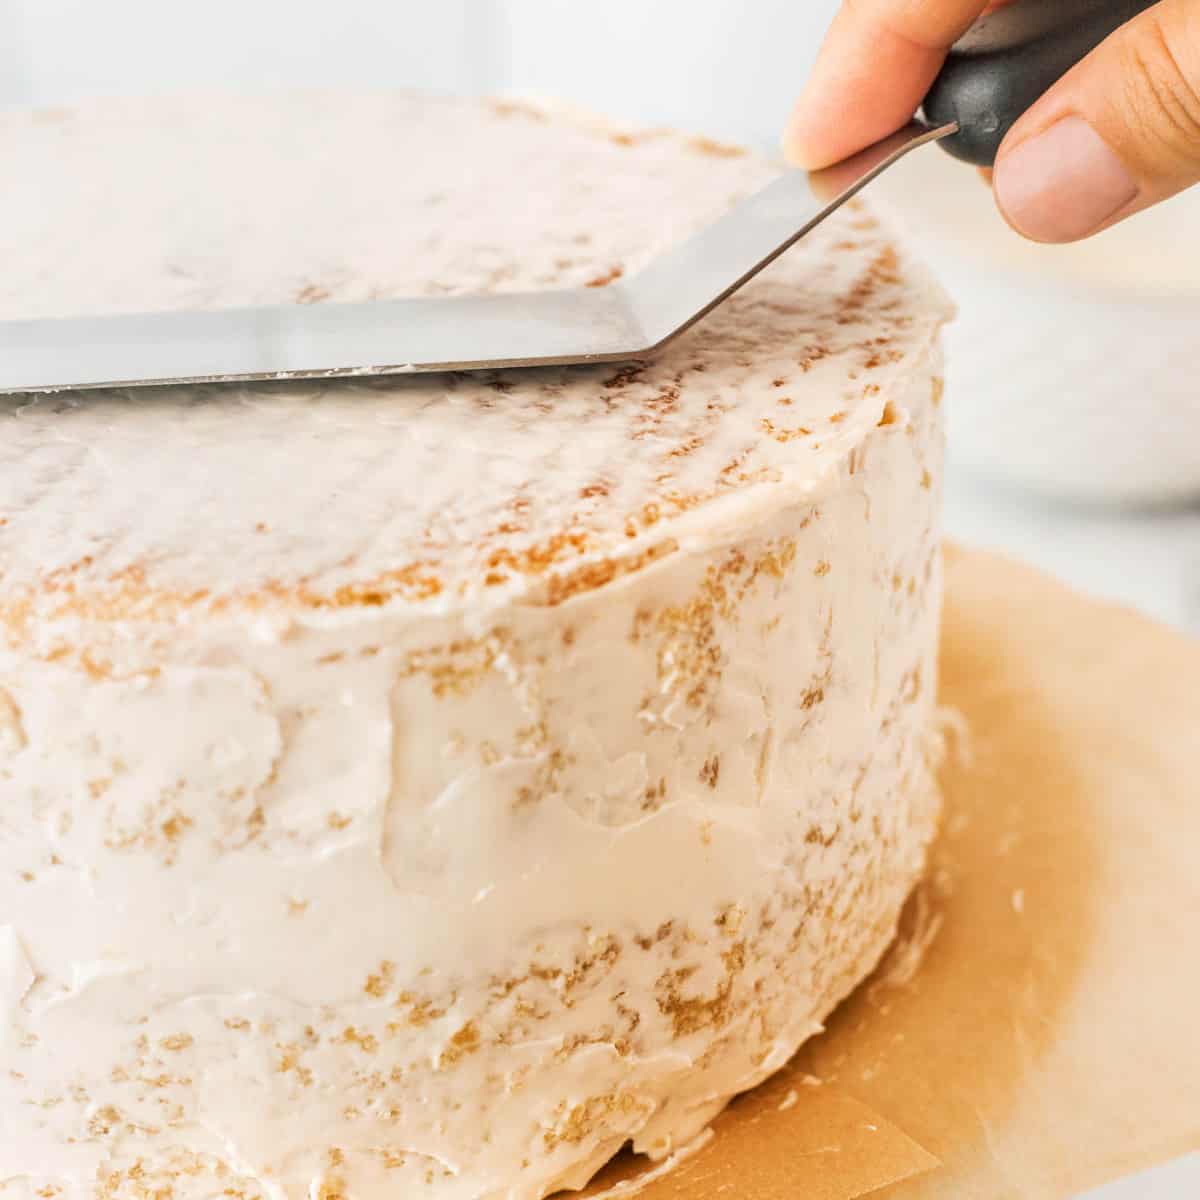 Finishing the crumb coat on a cake